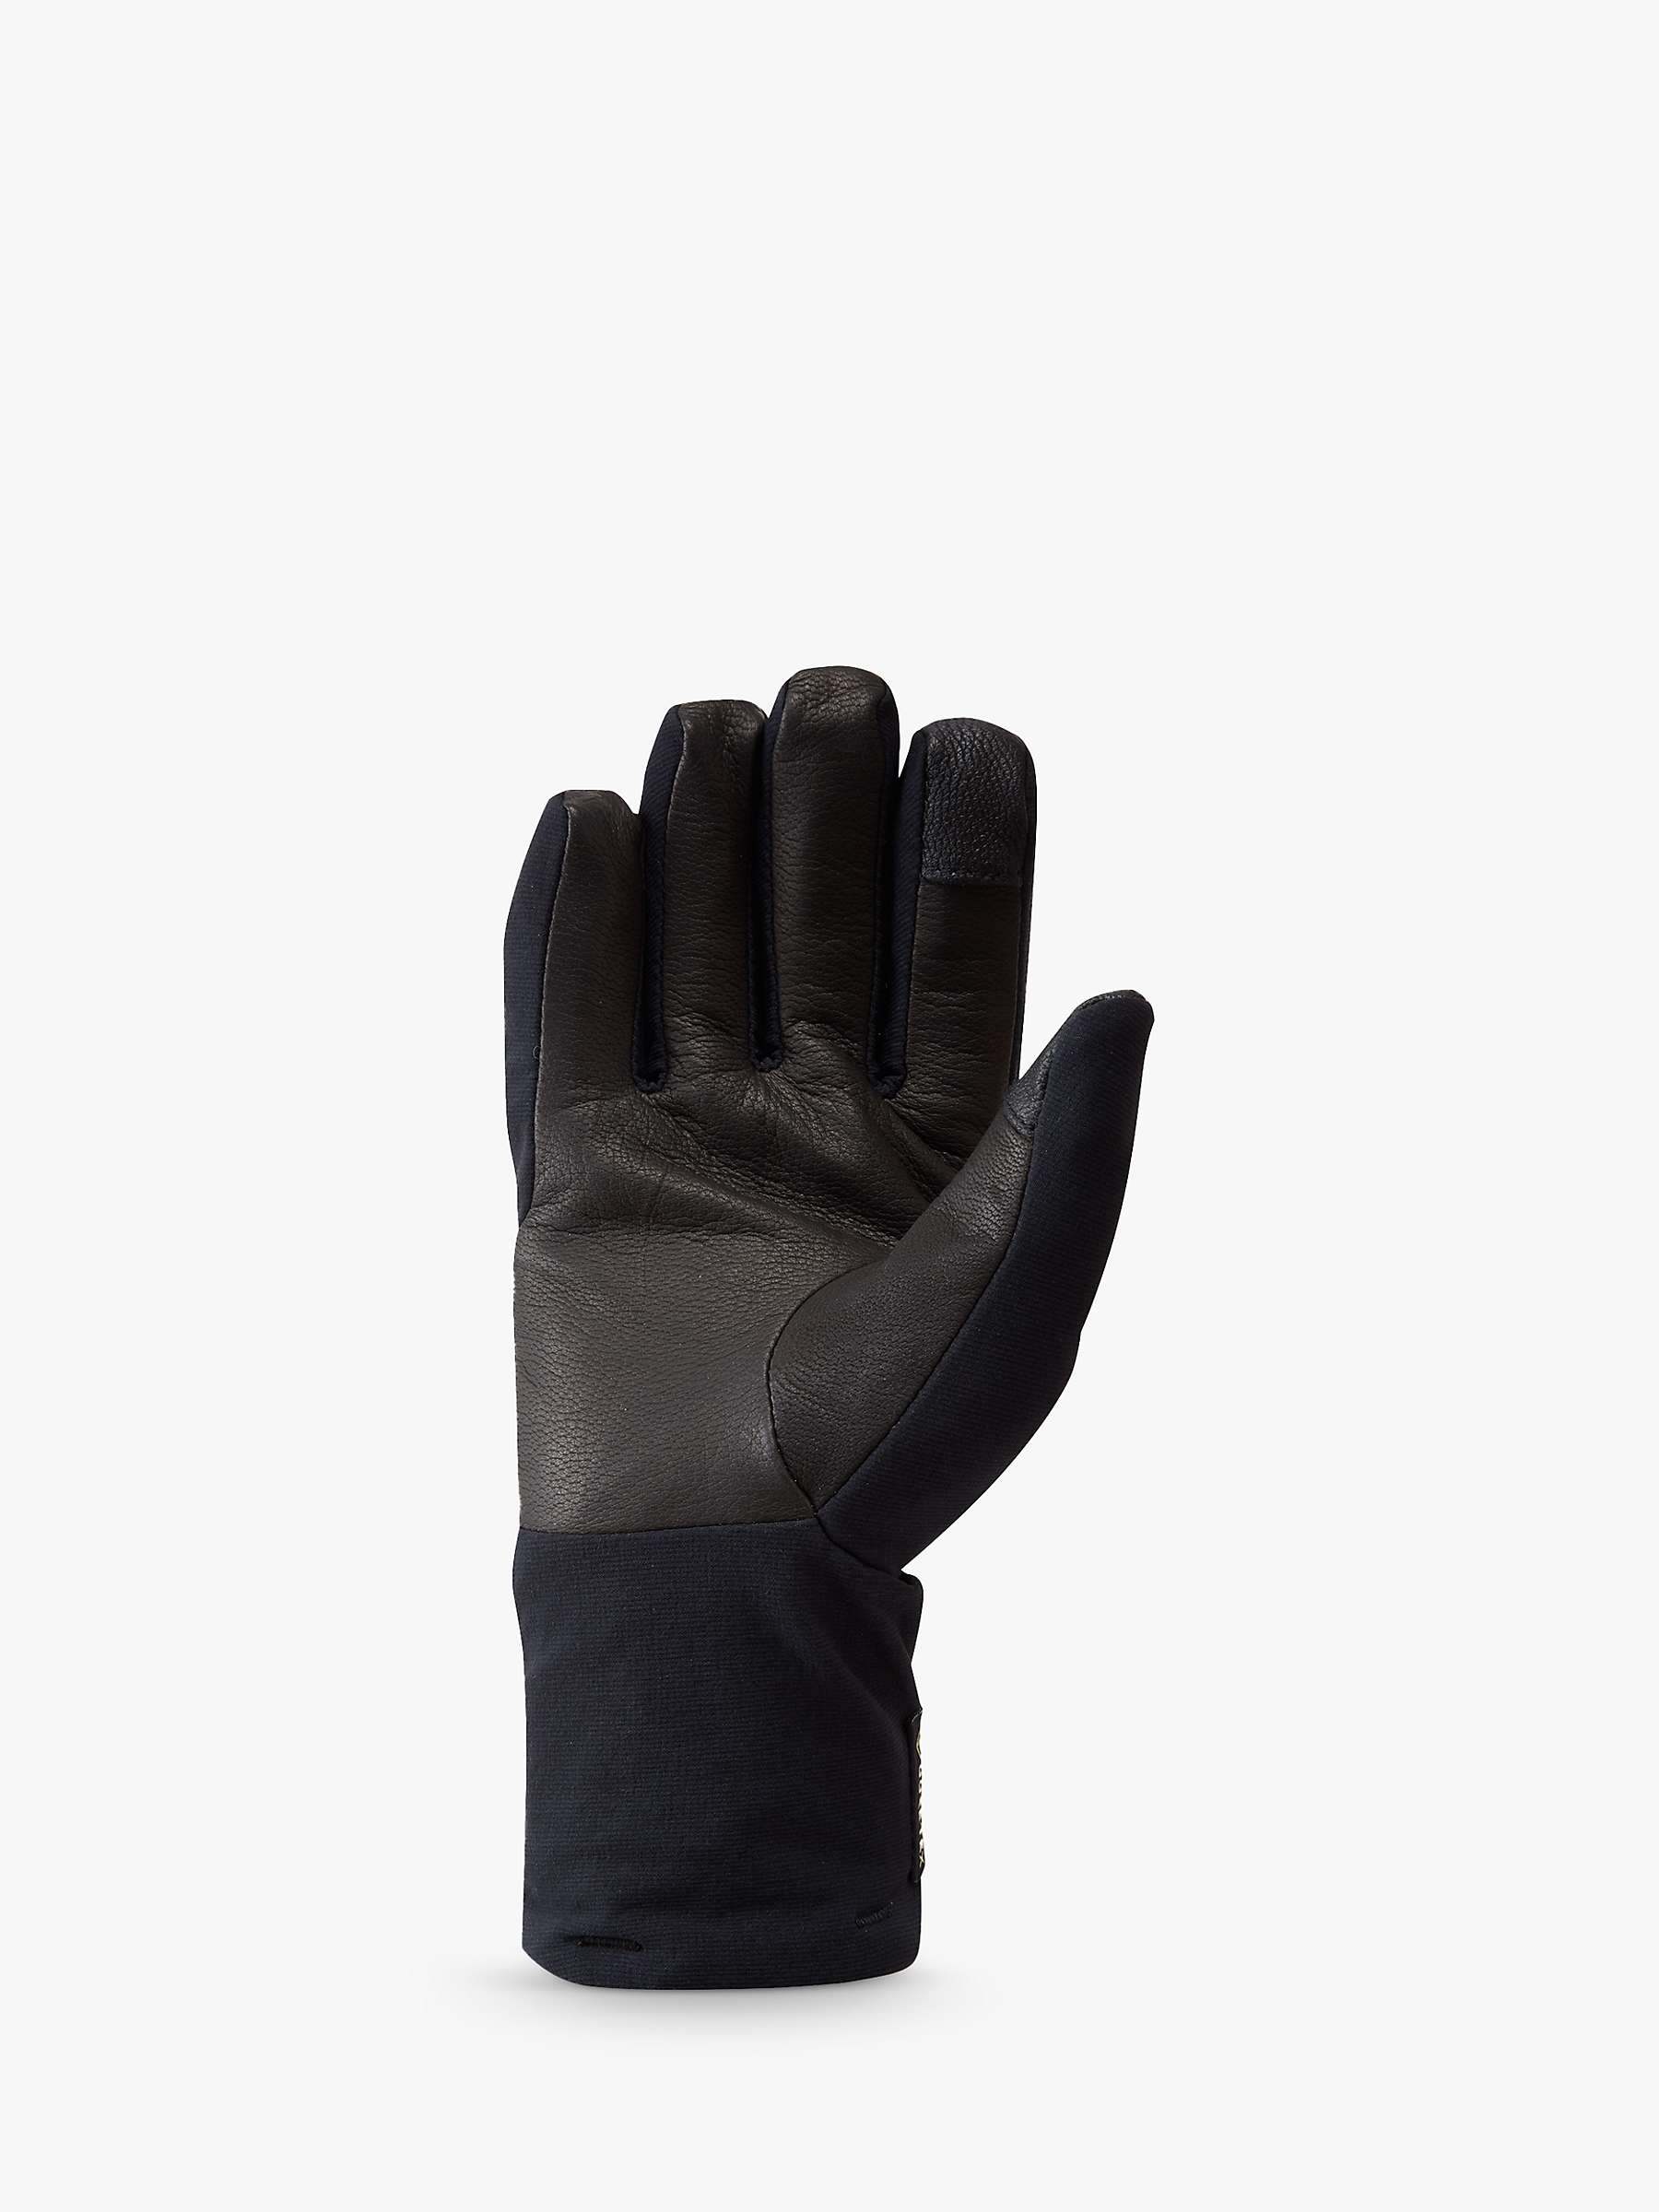 Buy Montane Women's Duality Waterproof Gloves, Black Online at johnlewis.com